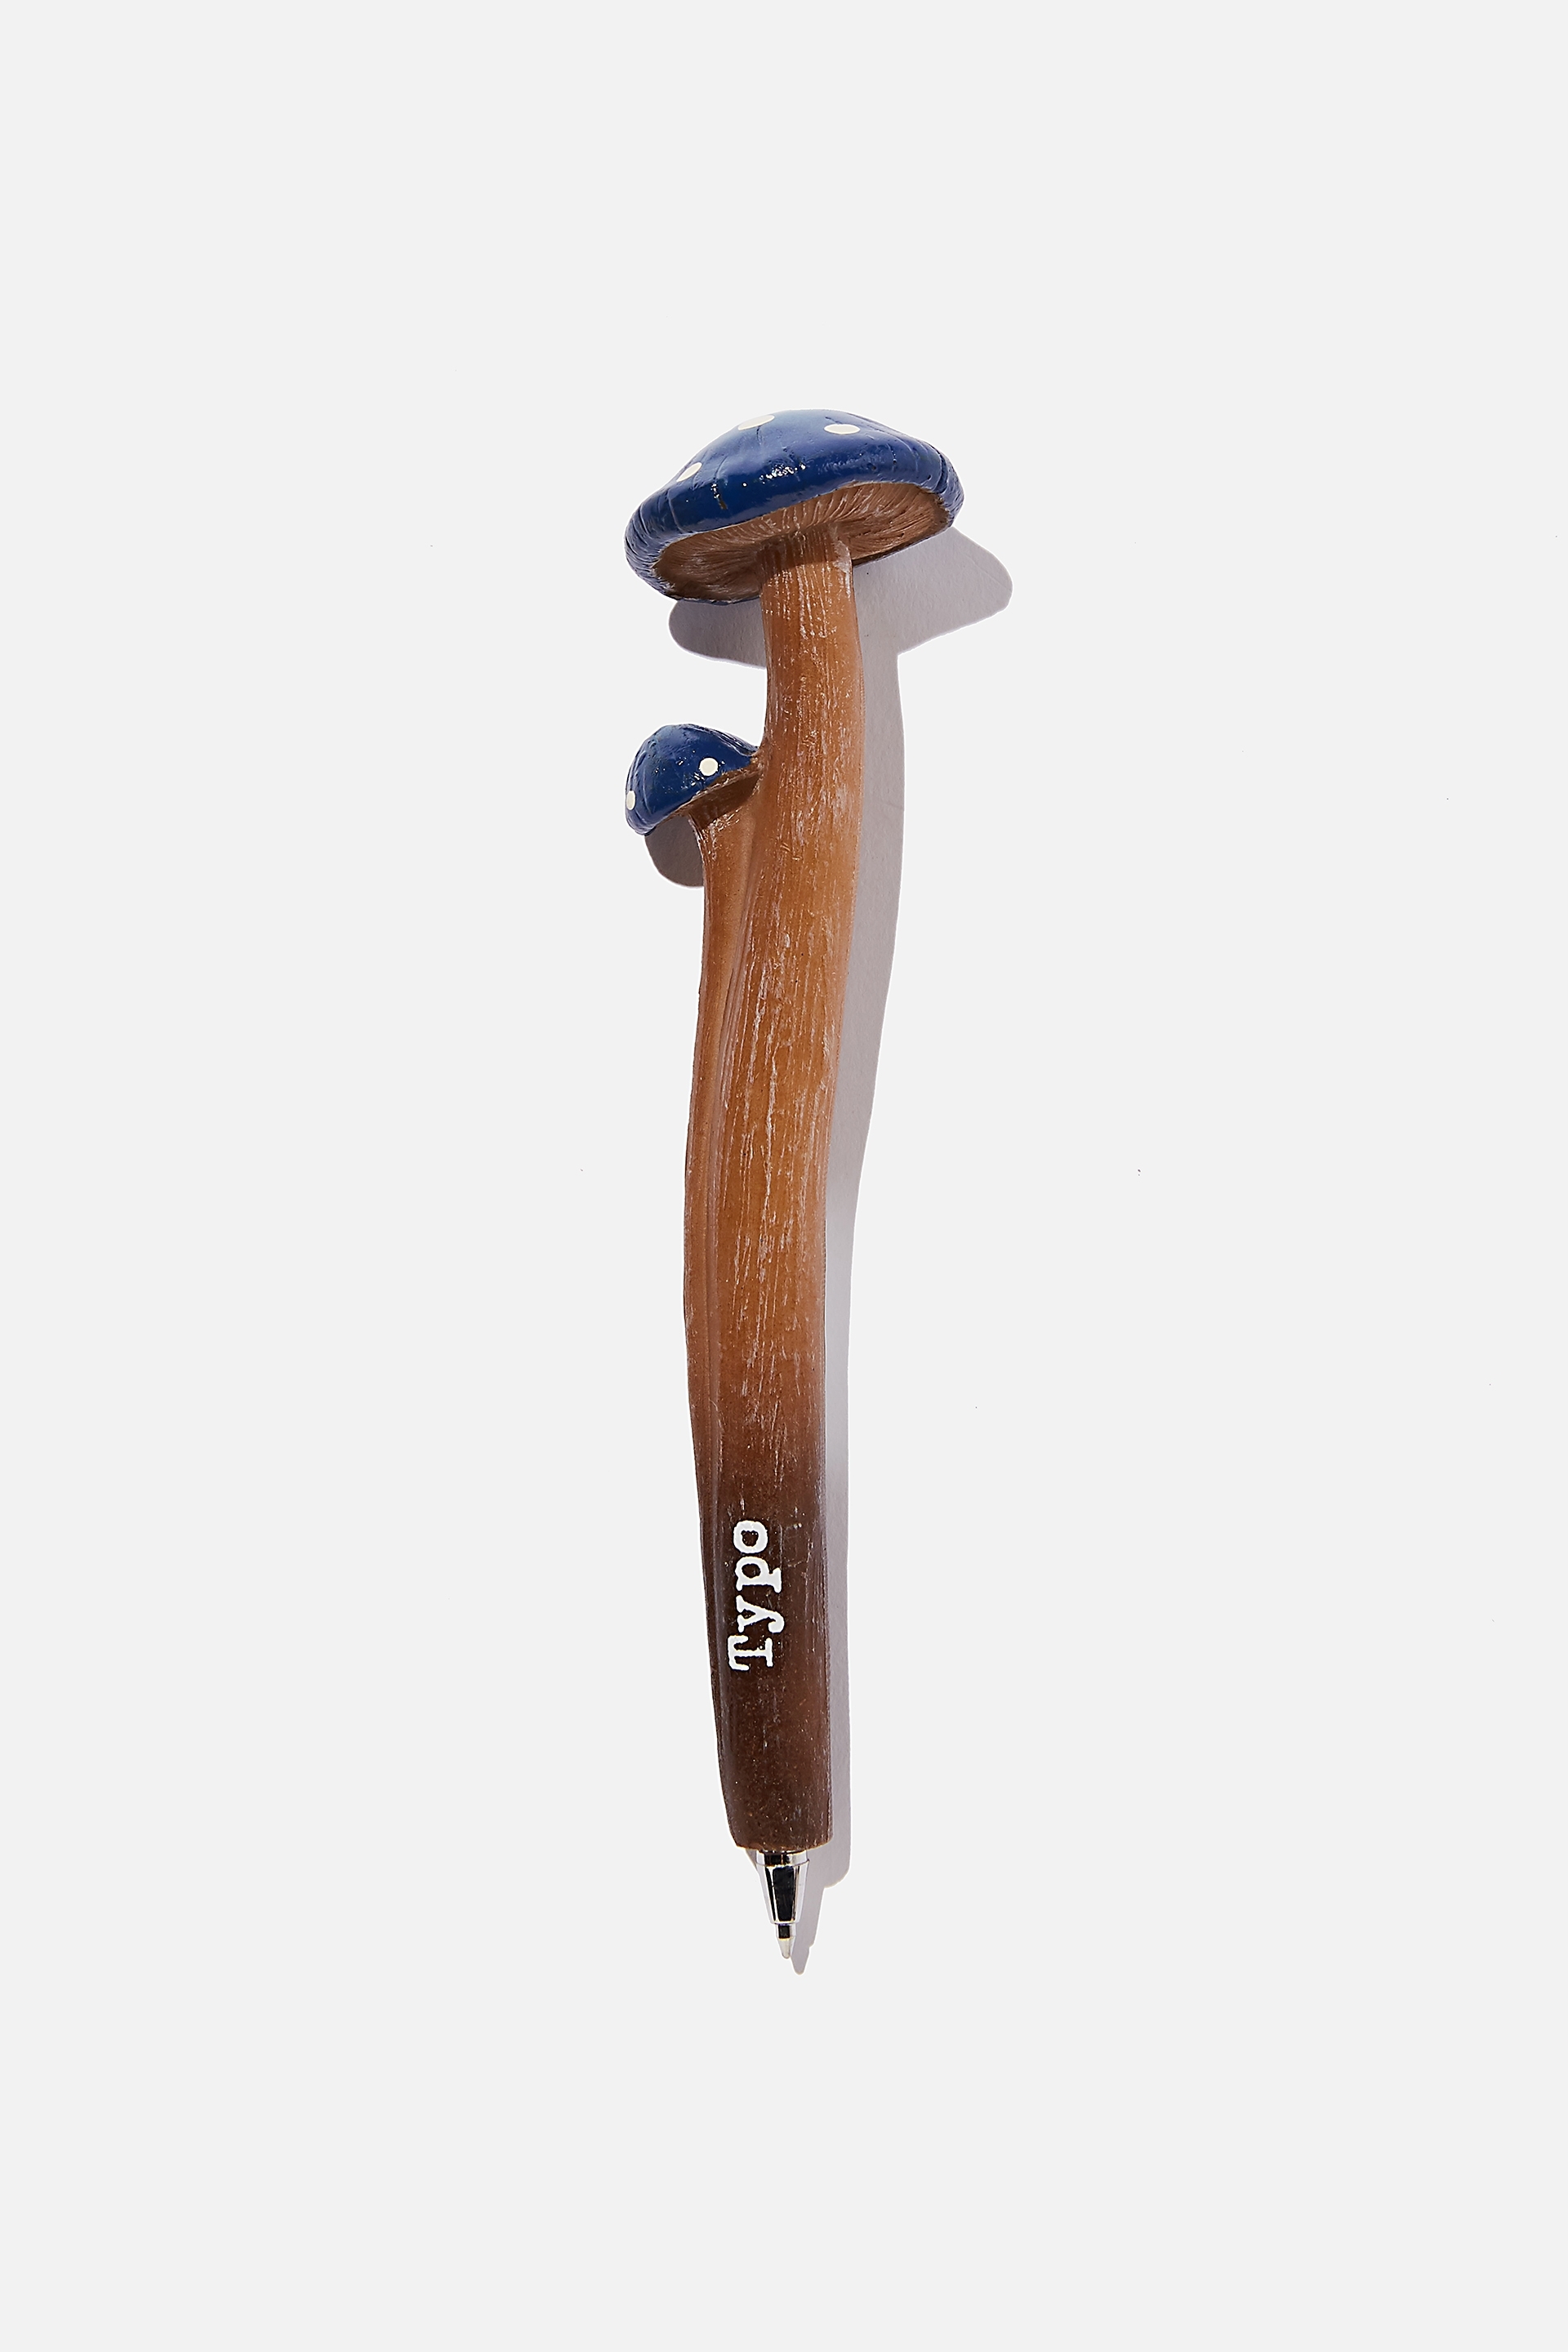 Typo - The Novelty Pen - Mushroom blue